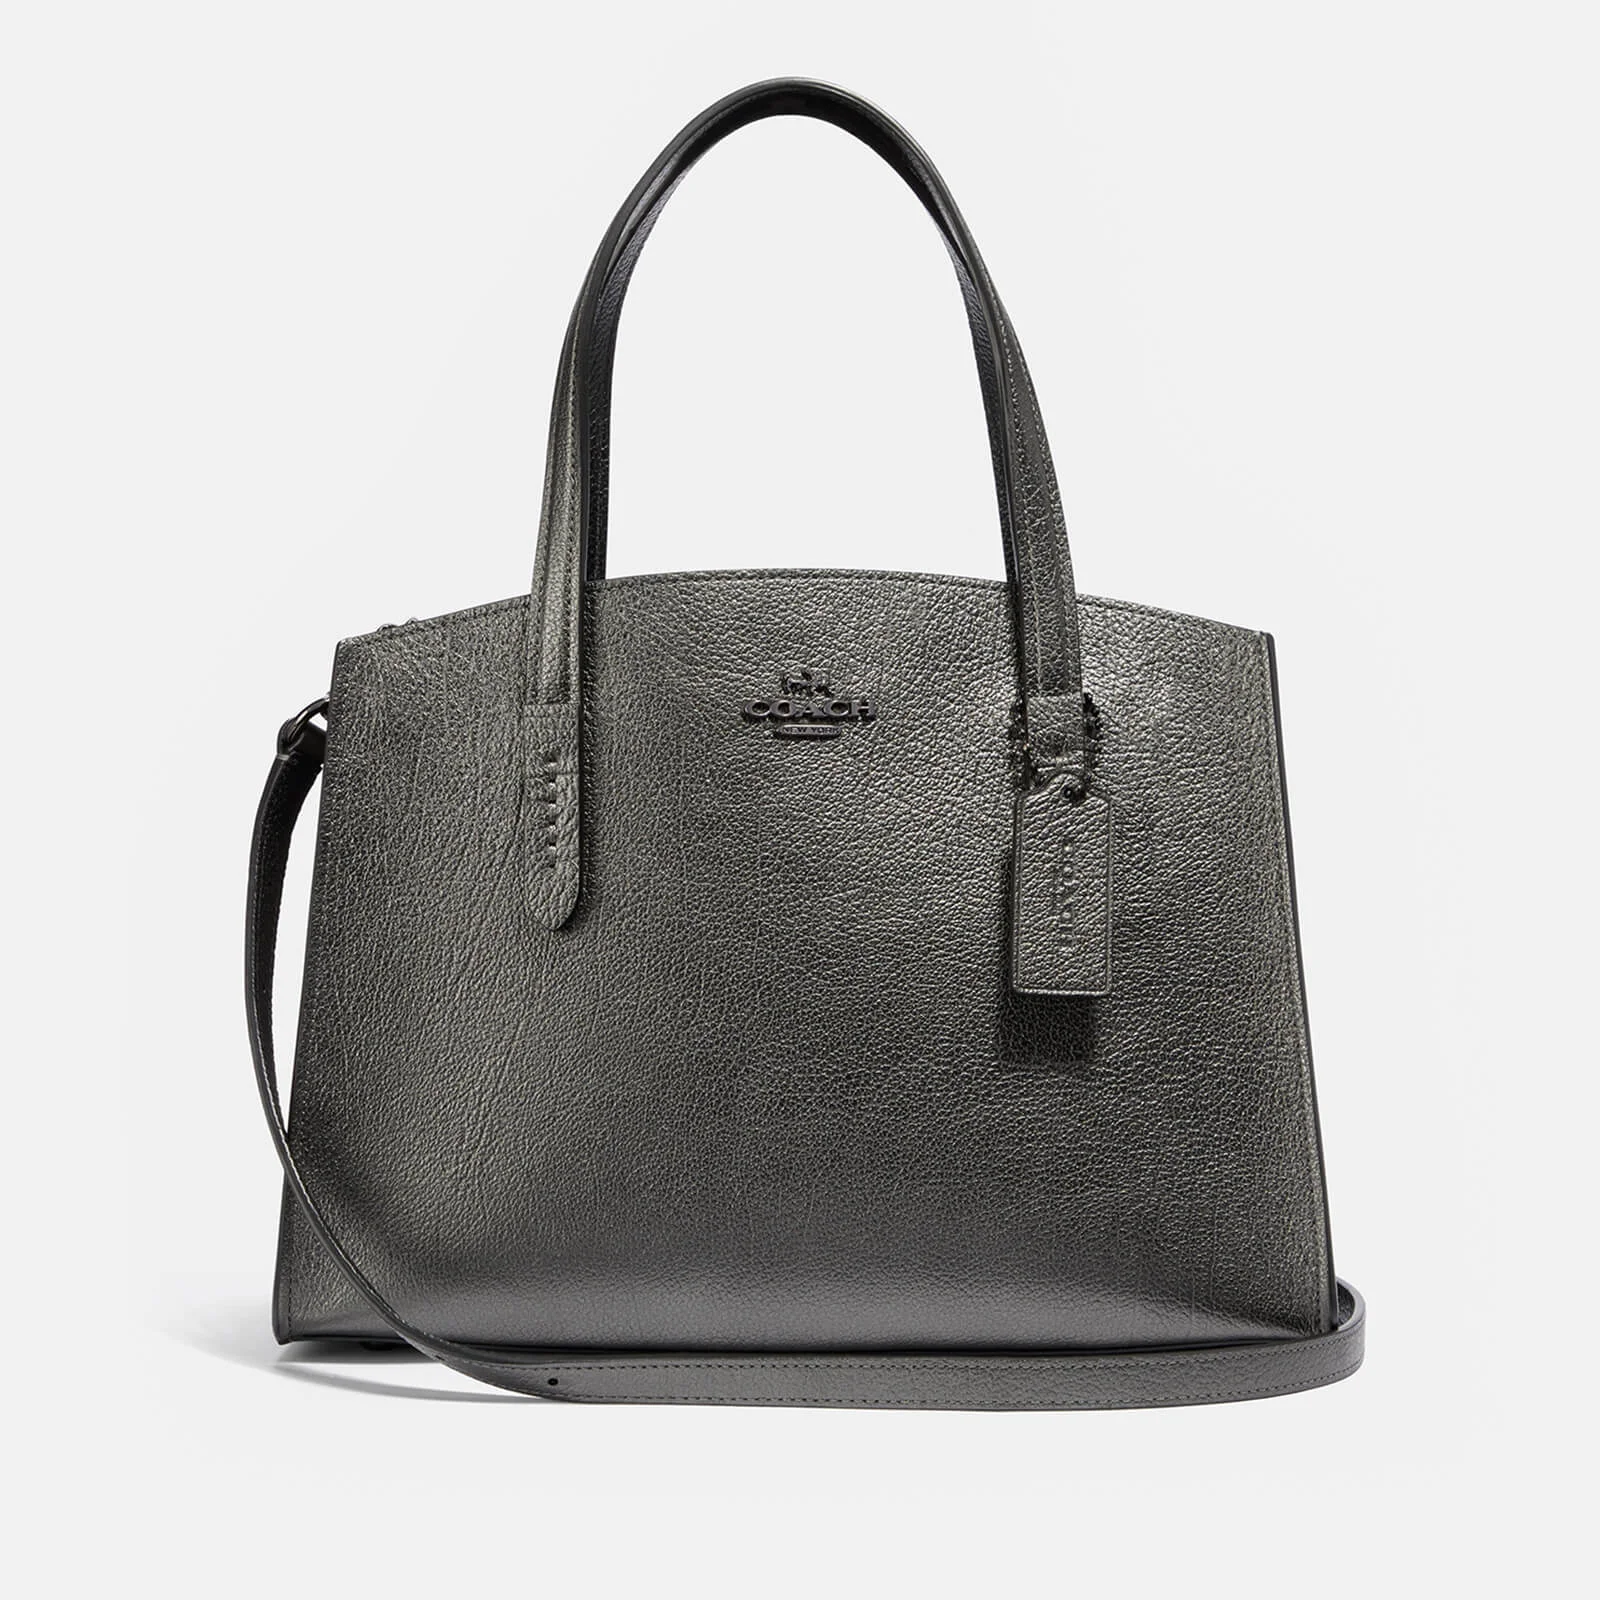 Coach Women's Charlie 28 Carryall Bag - Metallic Graphite Image 1